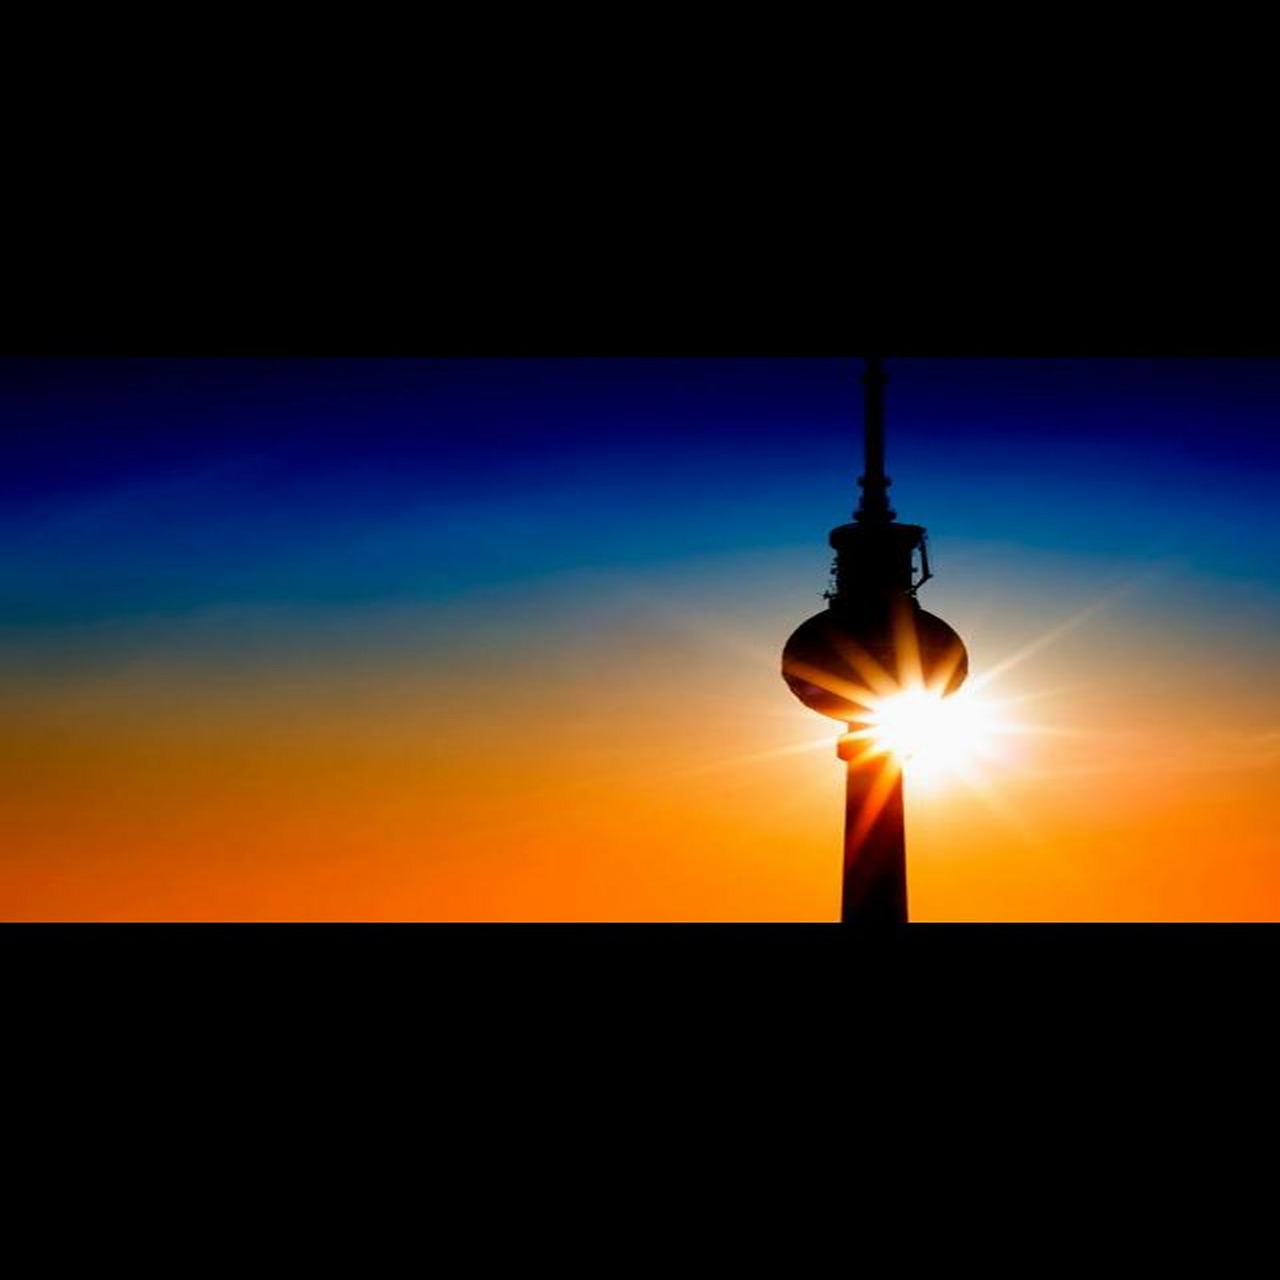 berlin tv tower radio tower free photo